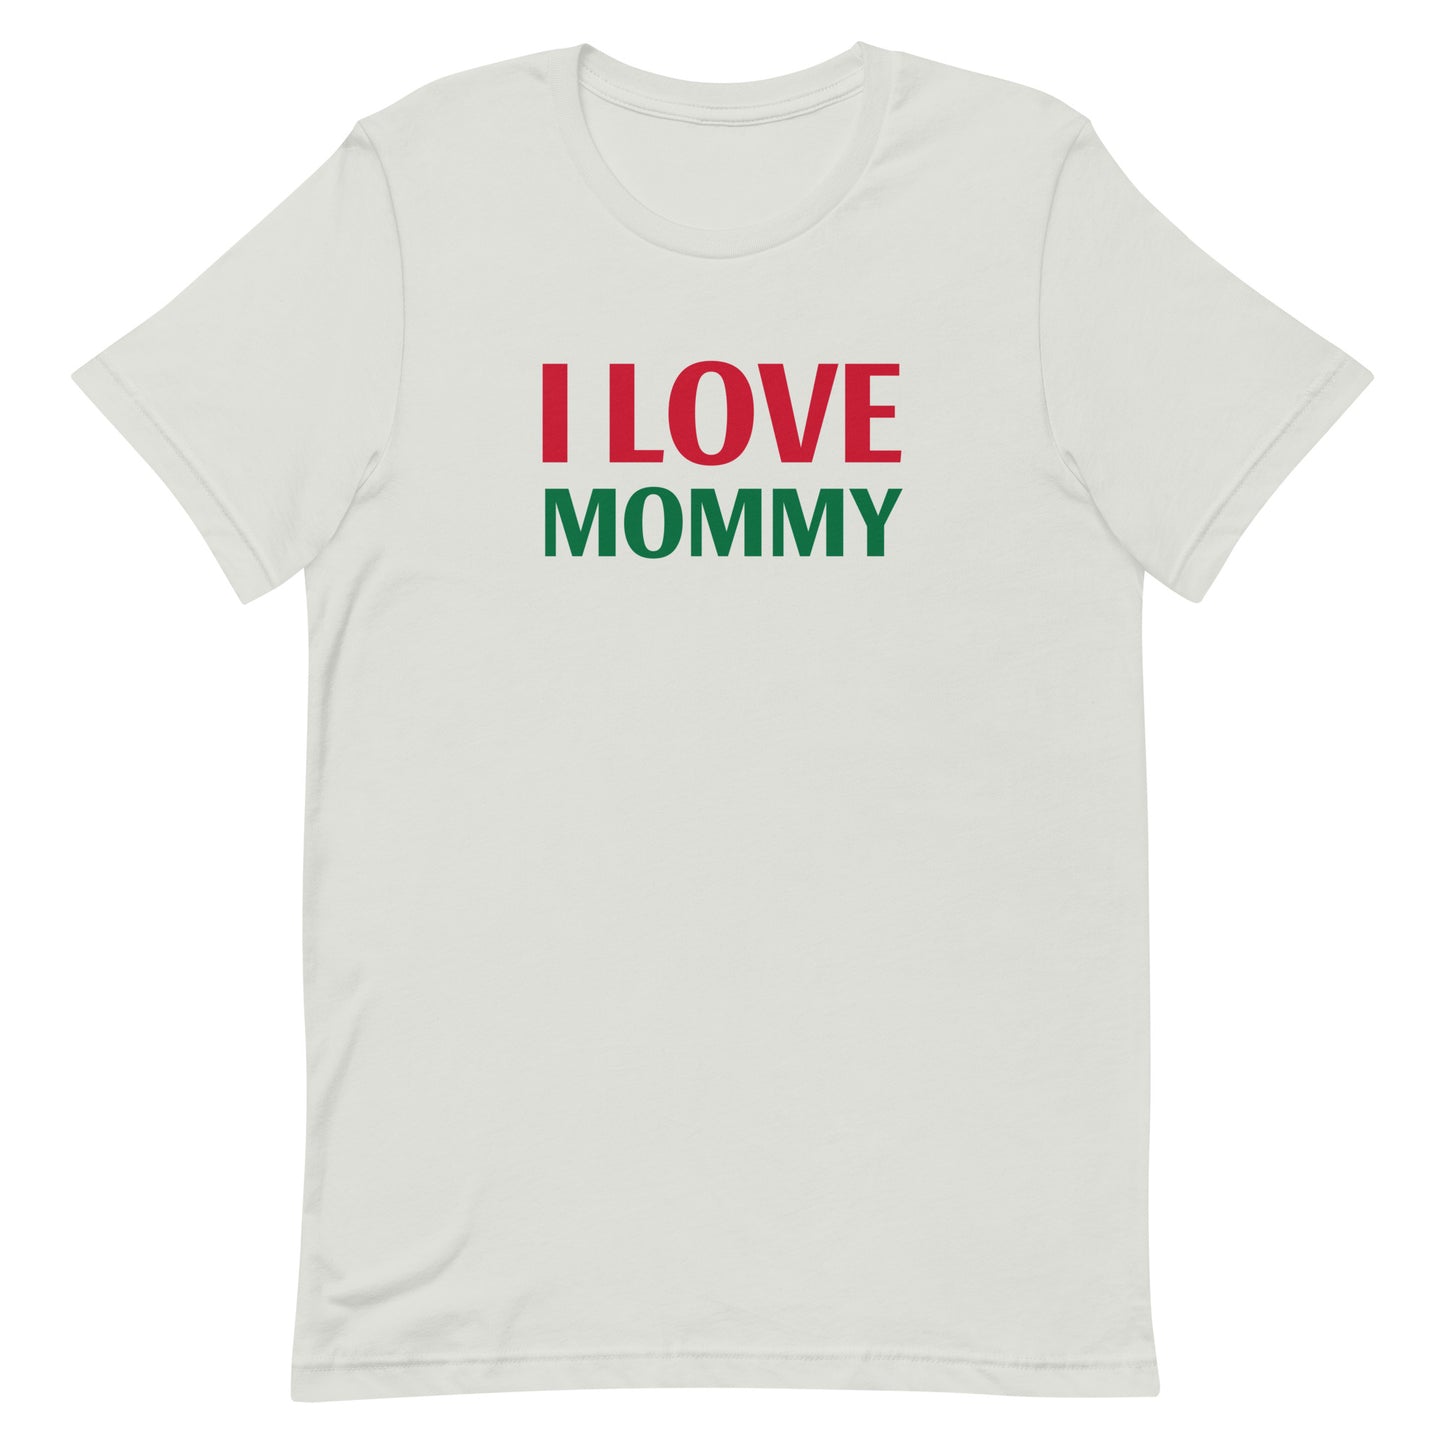 I LOVE MOMMY Unisex t-shirt